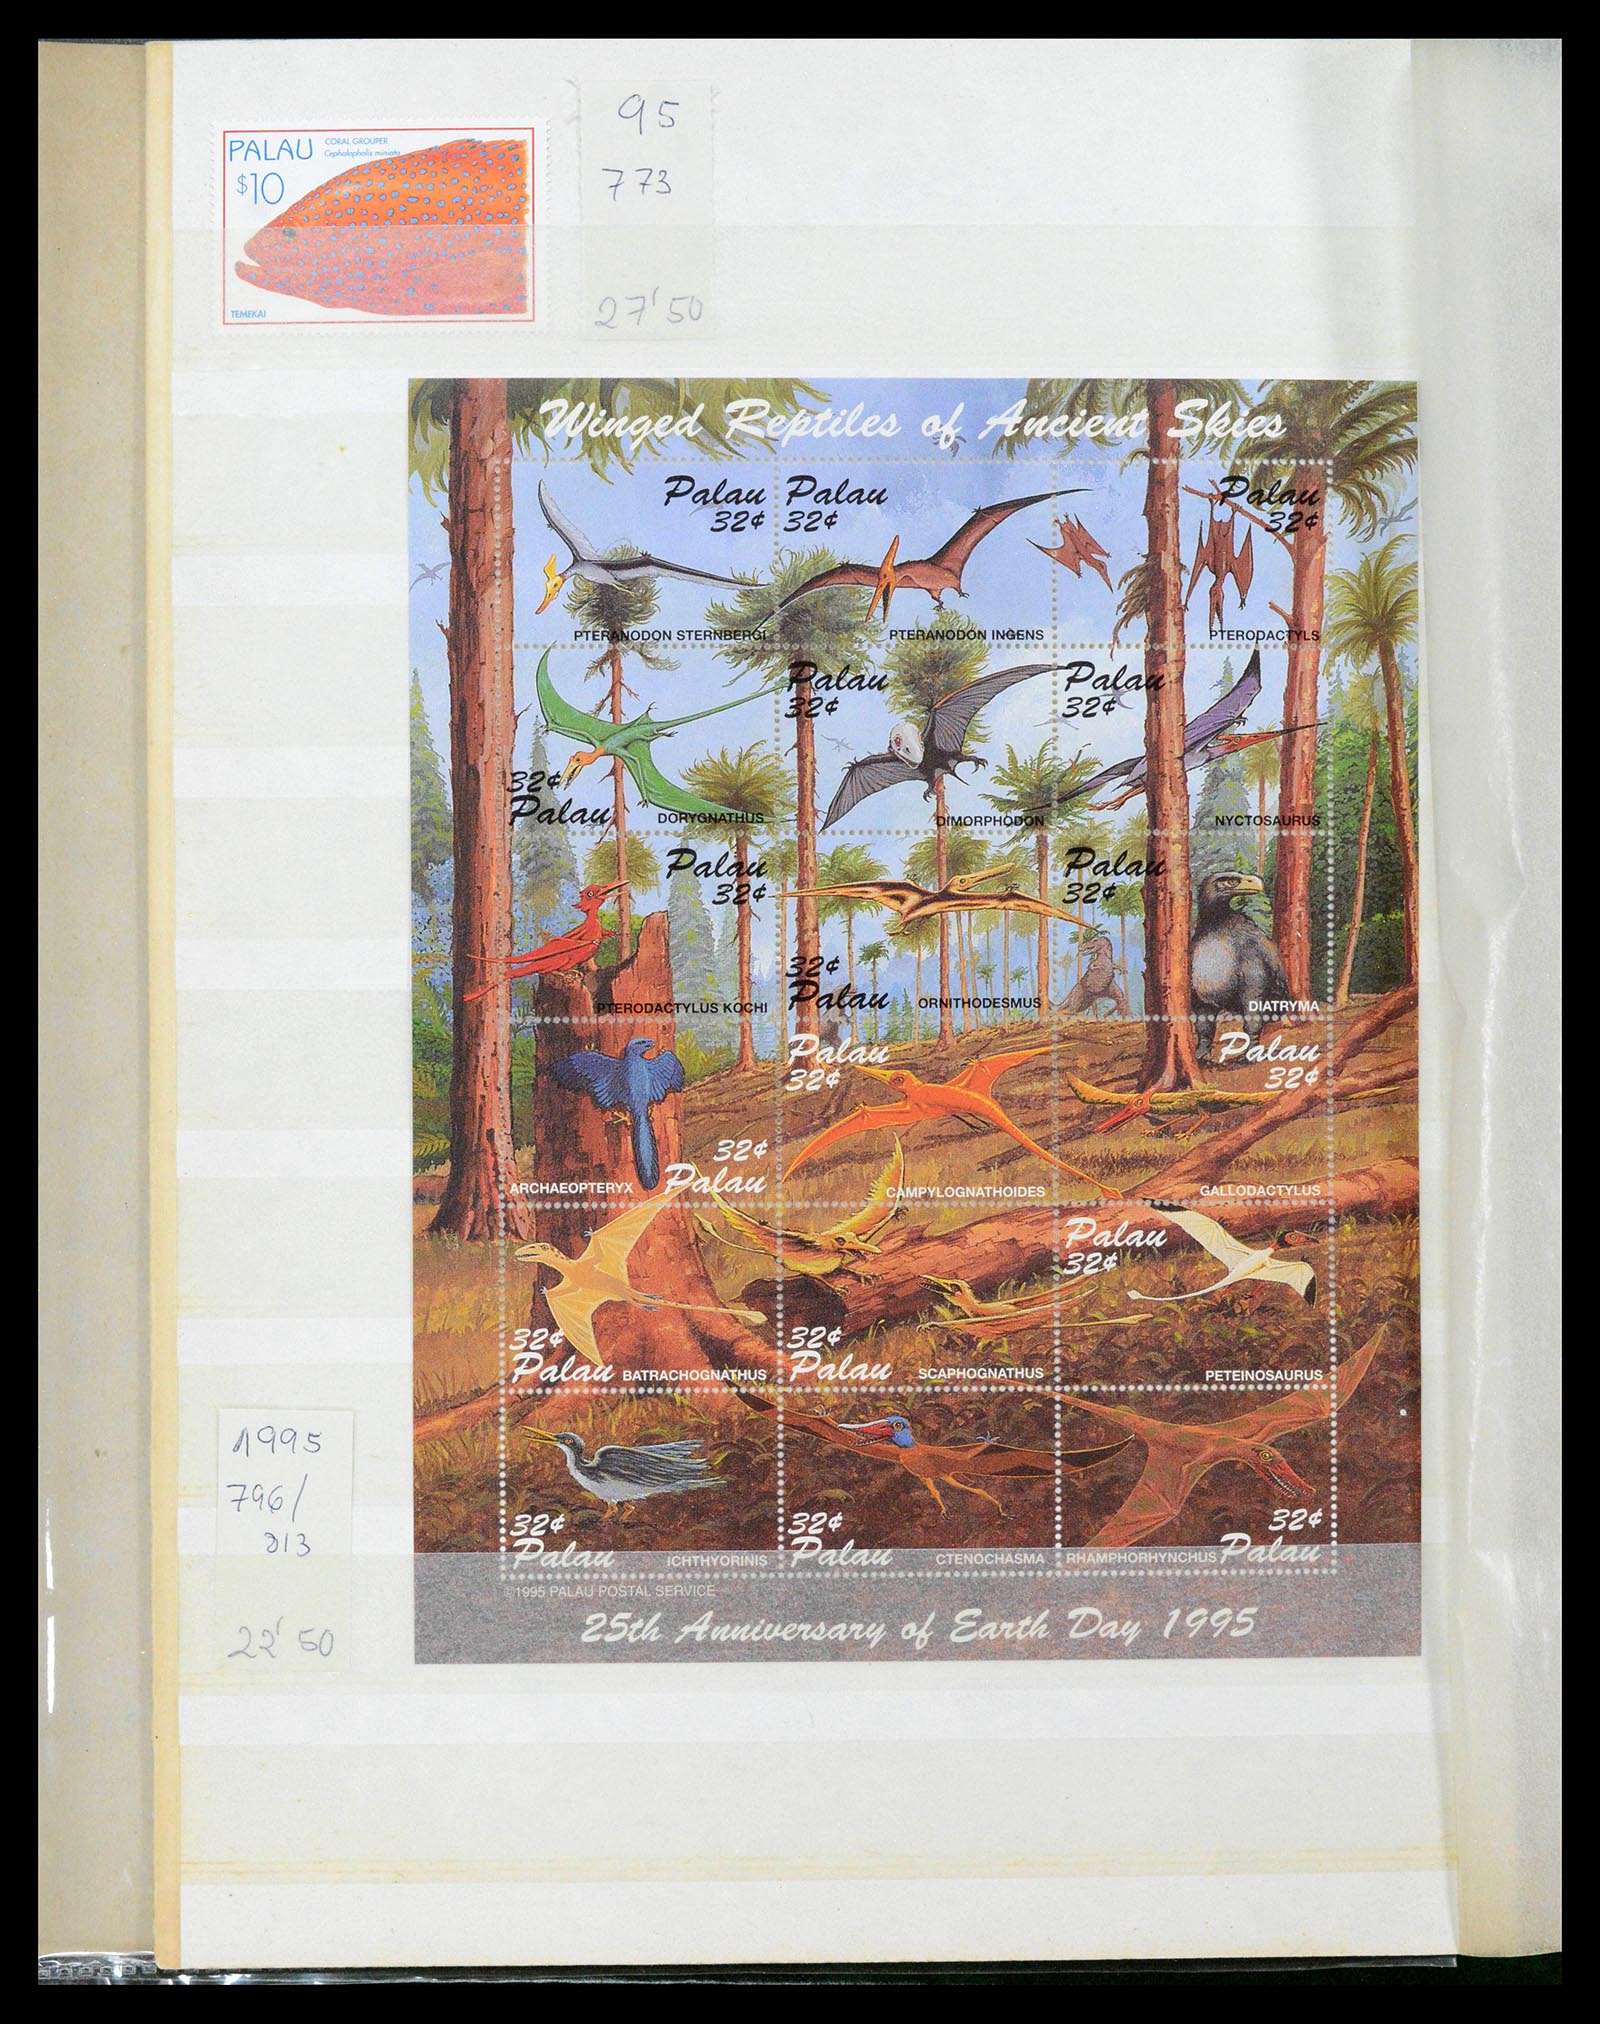 39222 0060 - Stamp collection 39222 Palau, Micronesia and Marshall islands 1980-1995.